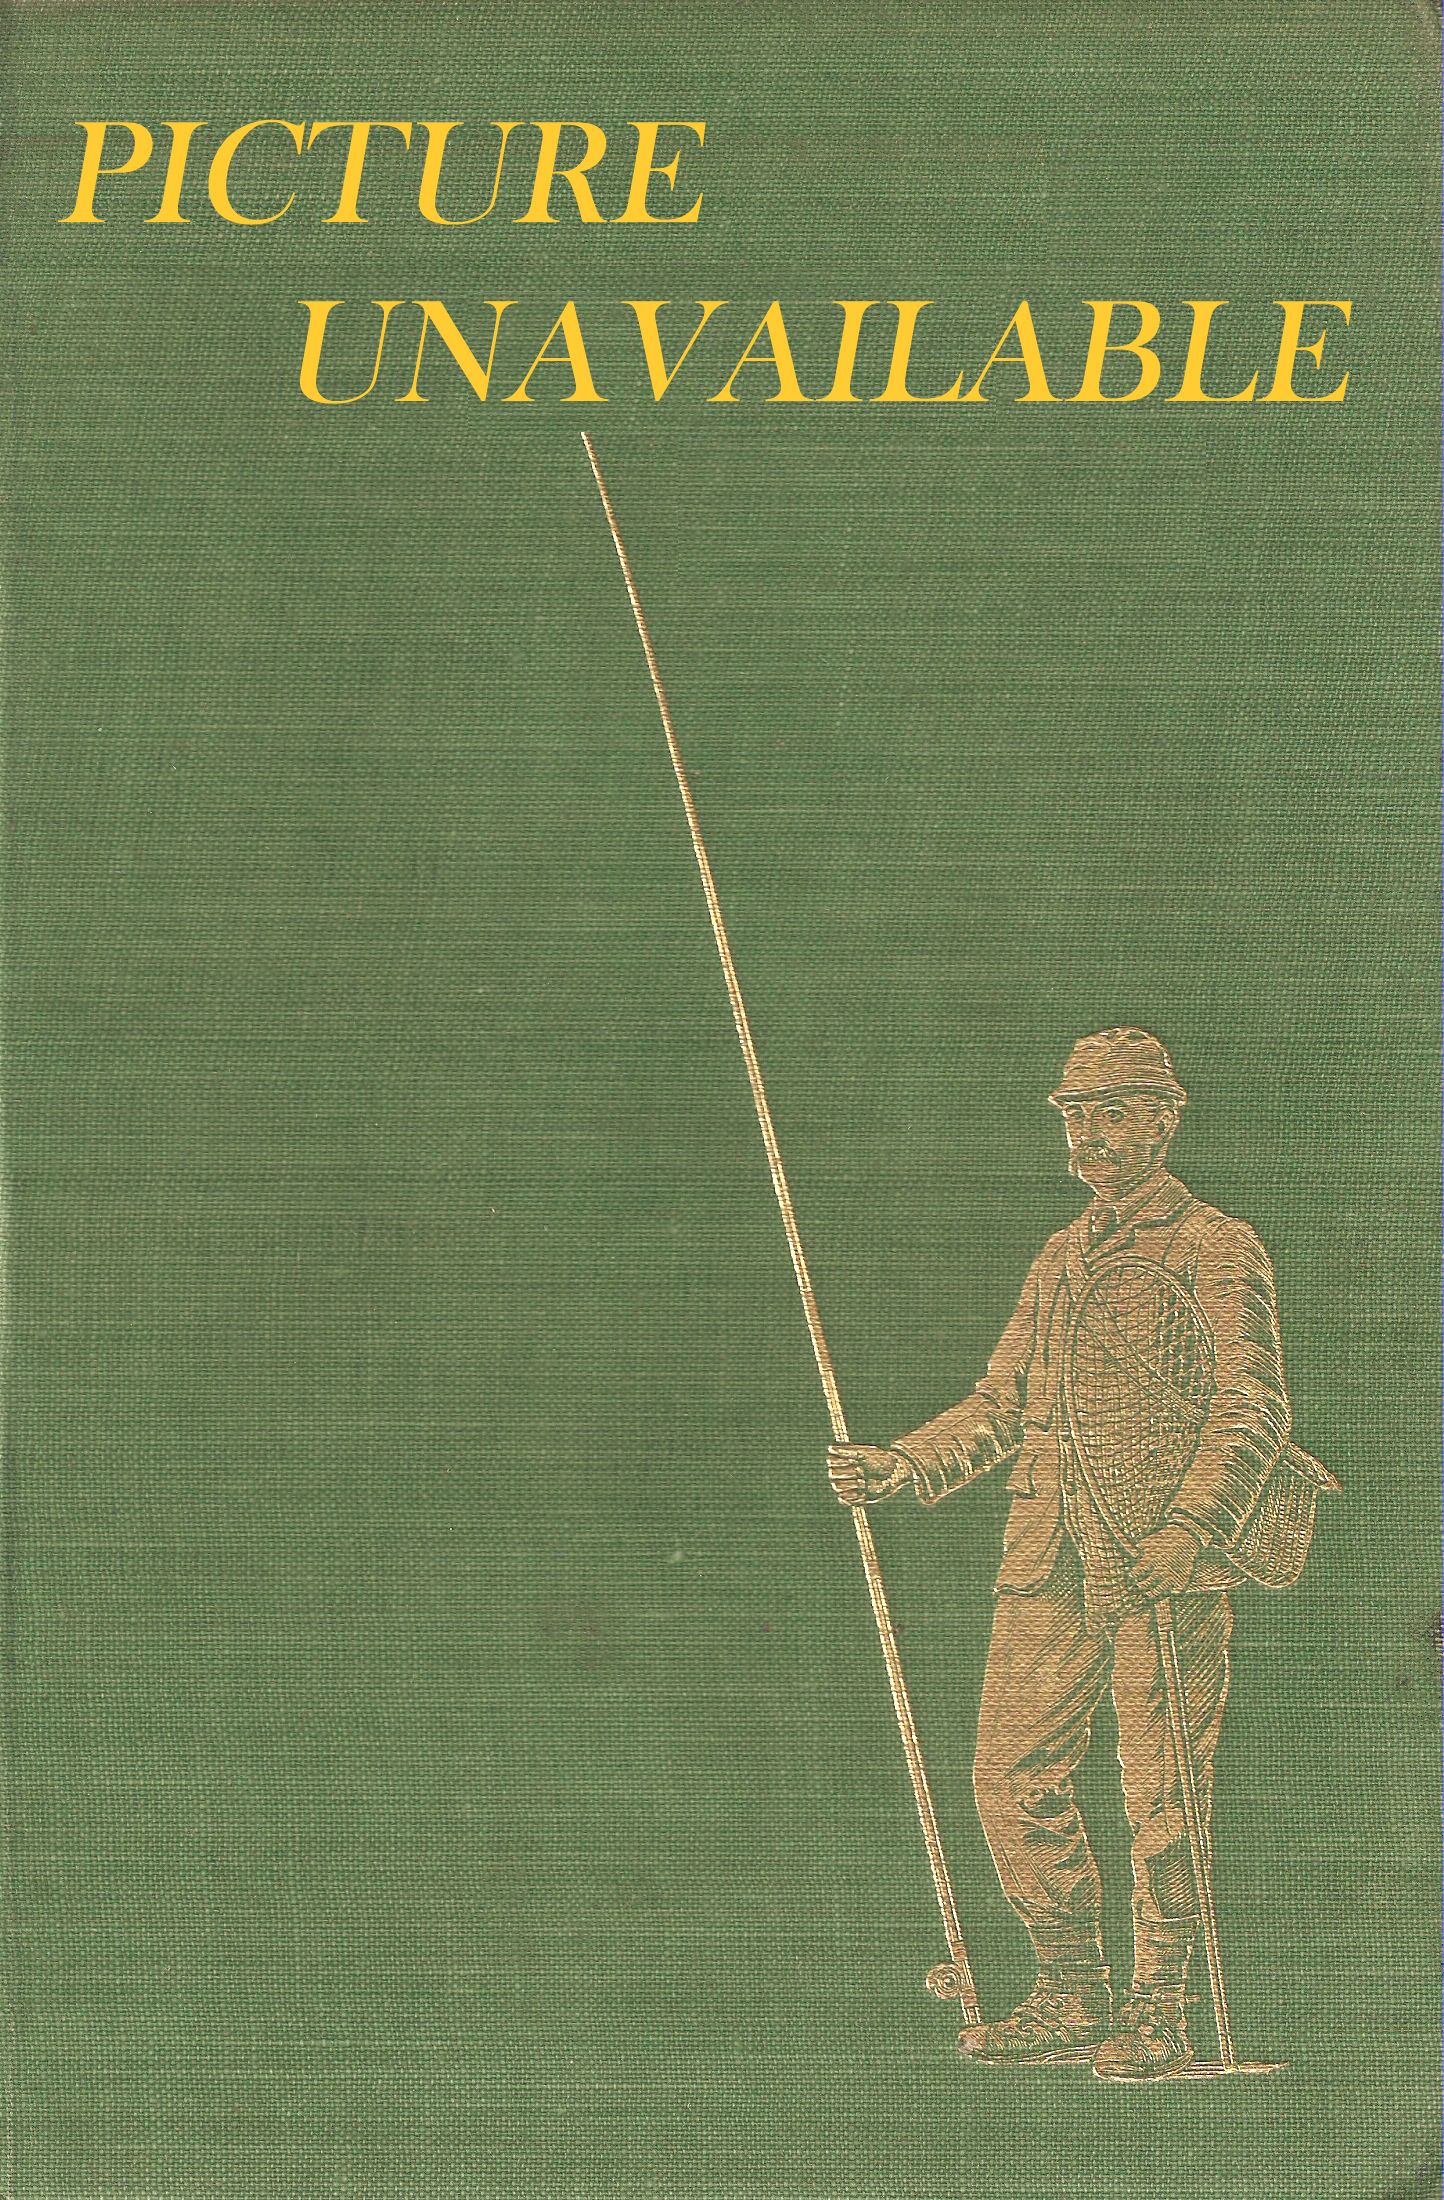 CREEL: A FISHING MAGAZINE. Volume 2, number 7. January 1965.